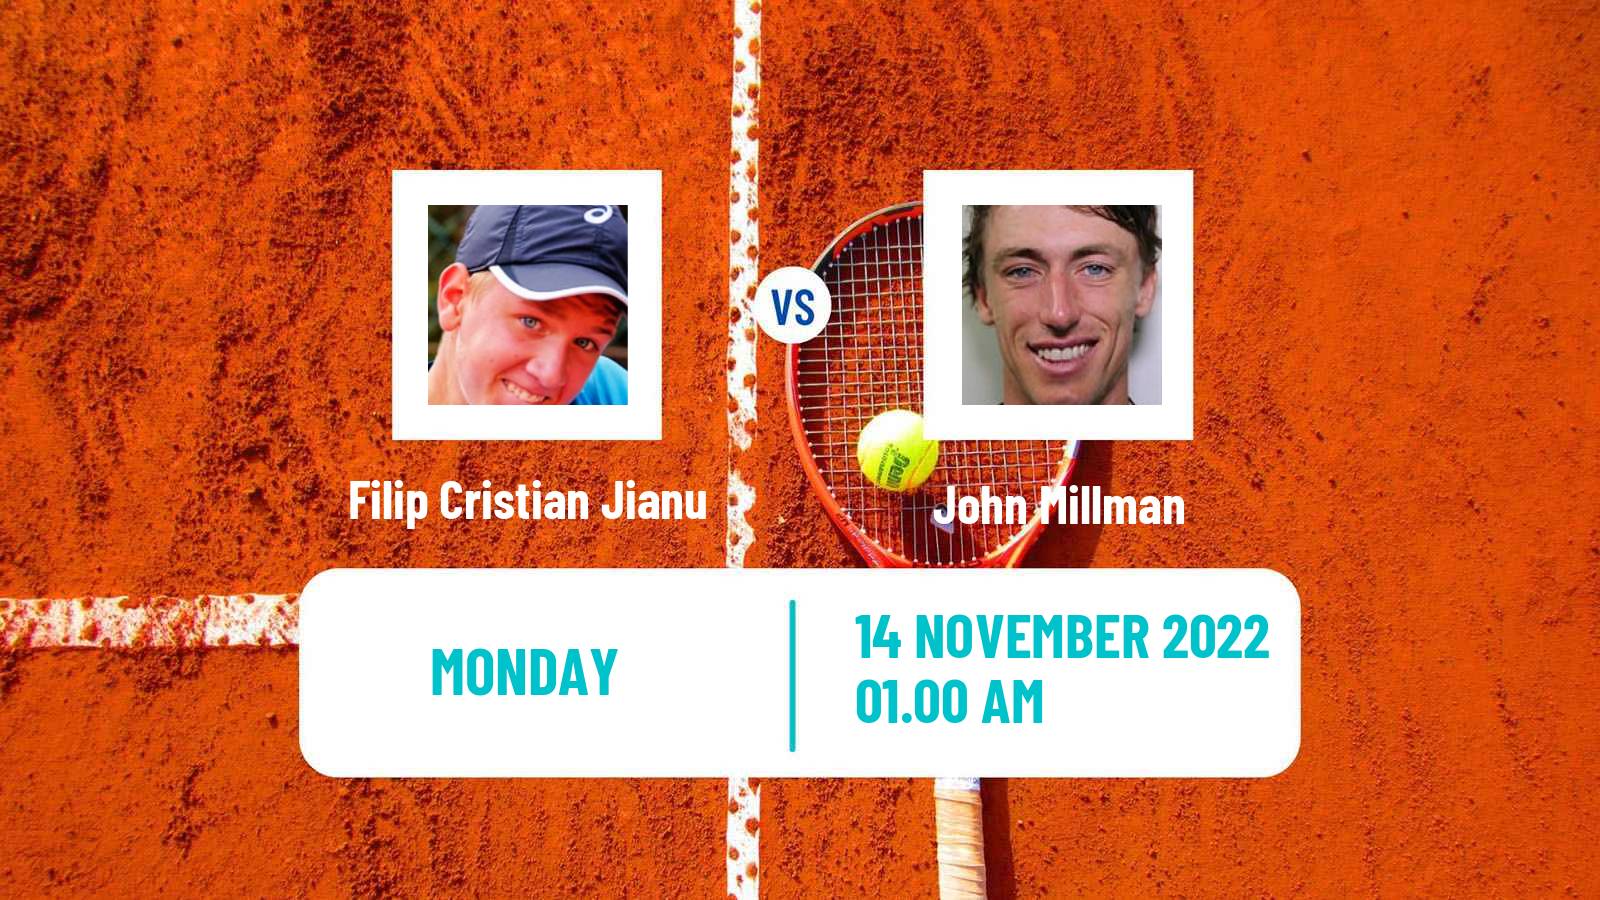 Tennis ATP Challenger Filip Cristian Jianu - John Millman